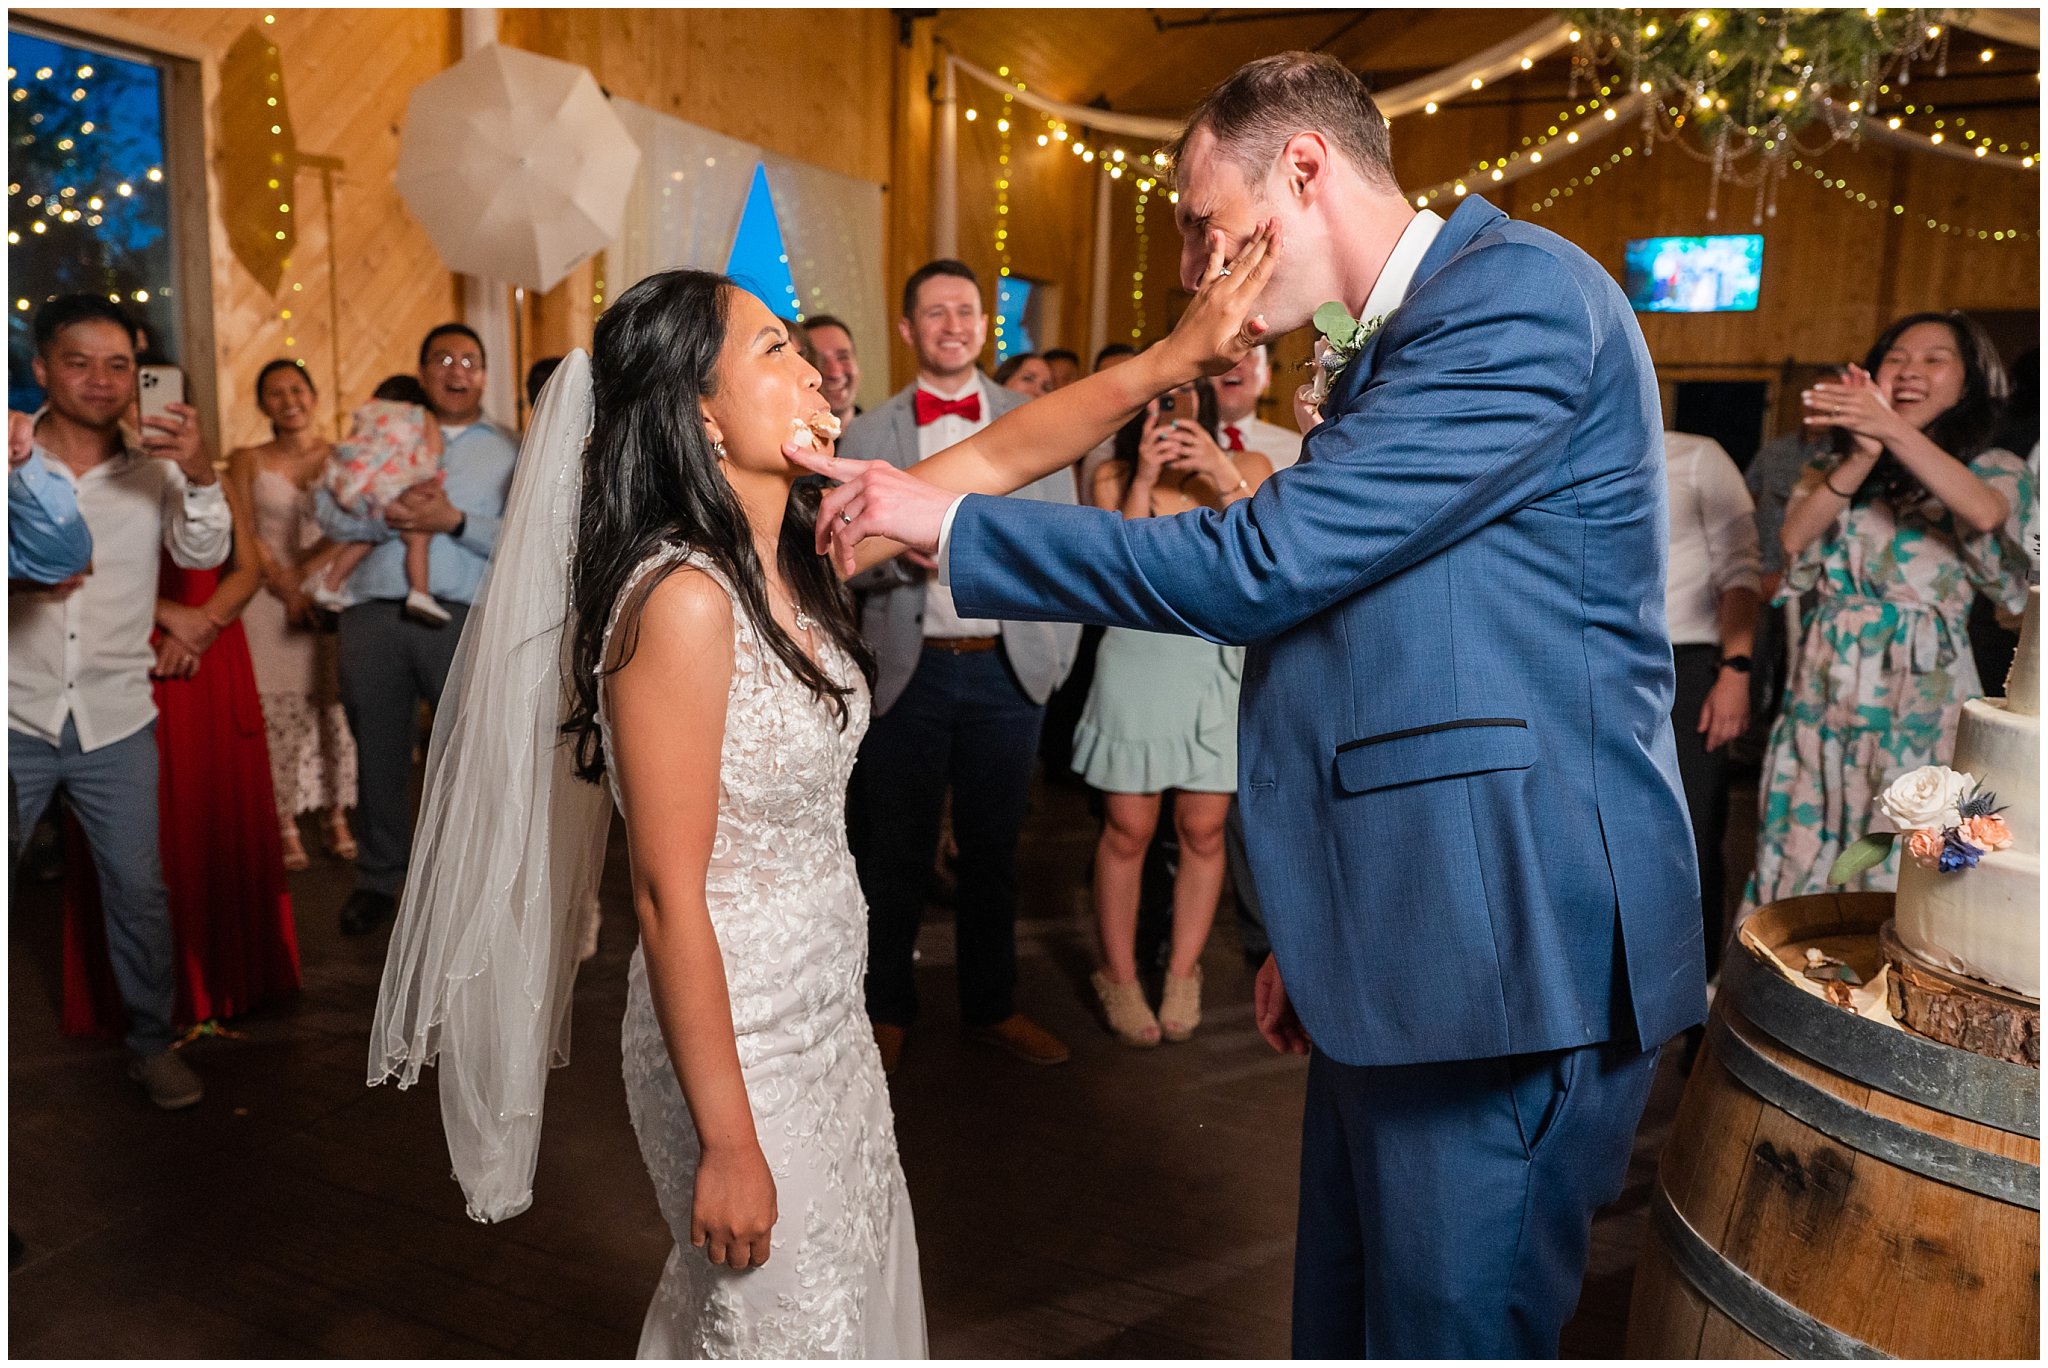 Cake cutting during reception in a barn | Oak Hills Utah Destination Wedding | Jessie and Dallin Photography